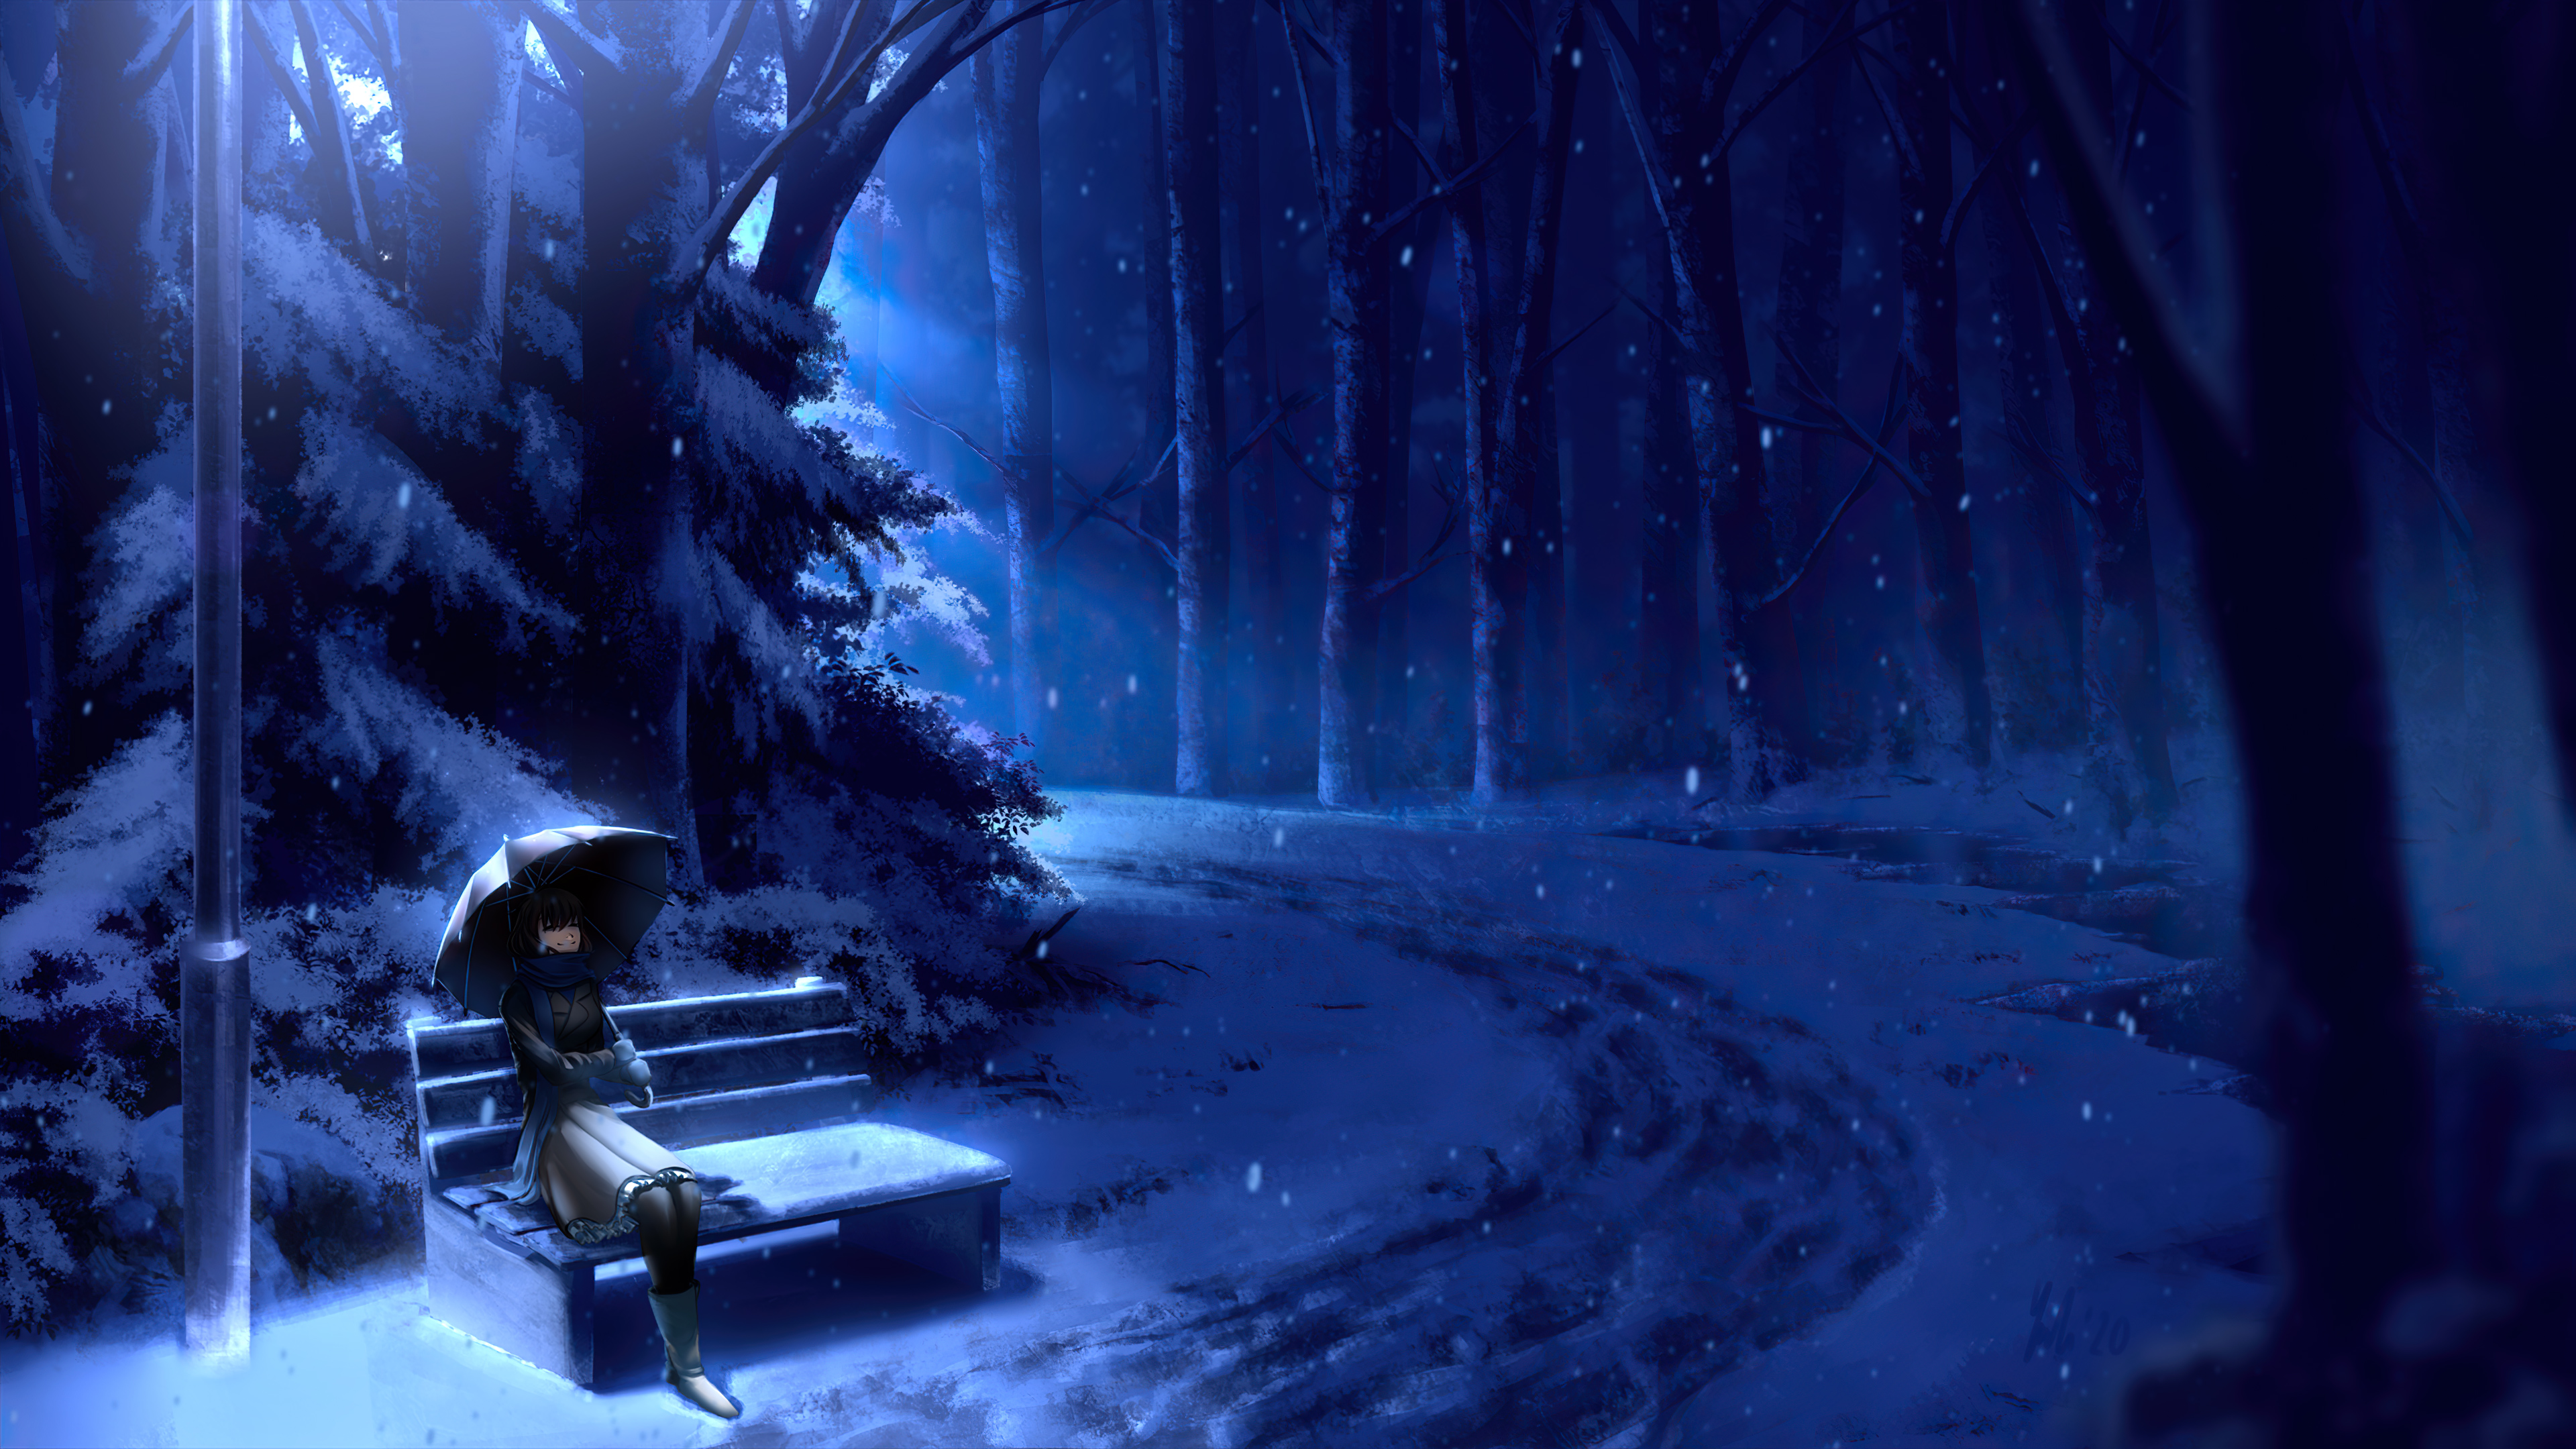 Winter Stillness 4k, HD Artist, 4k Wallpaper, Image, Background, Photo and Picture